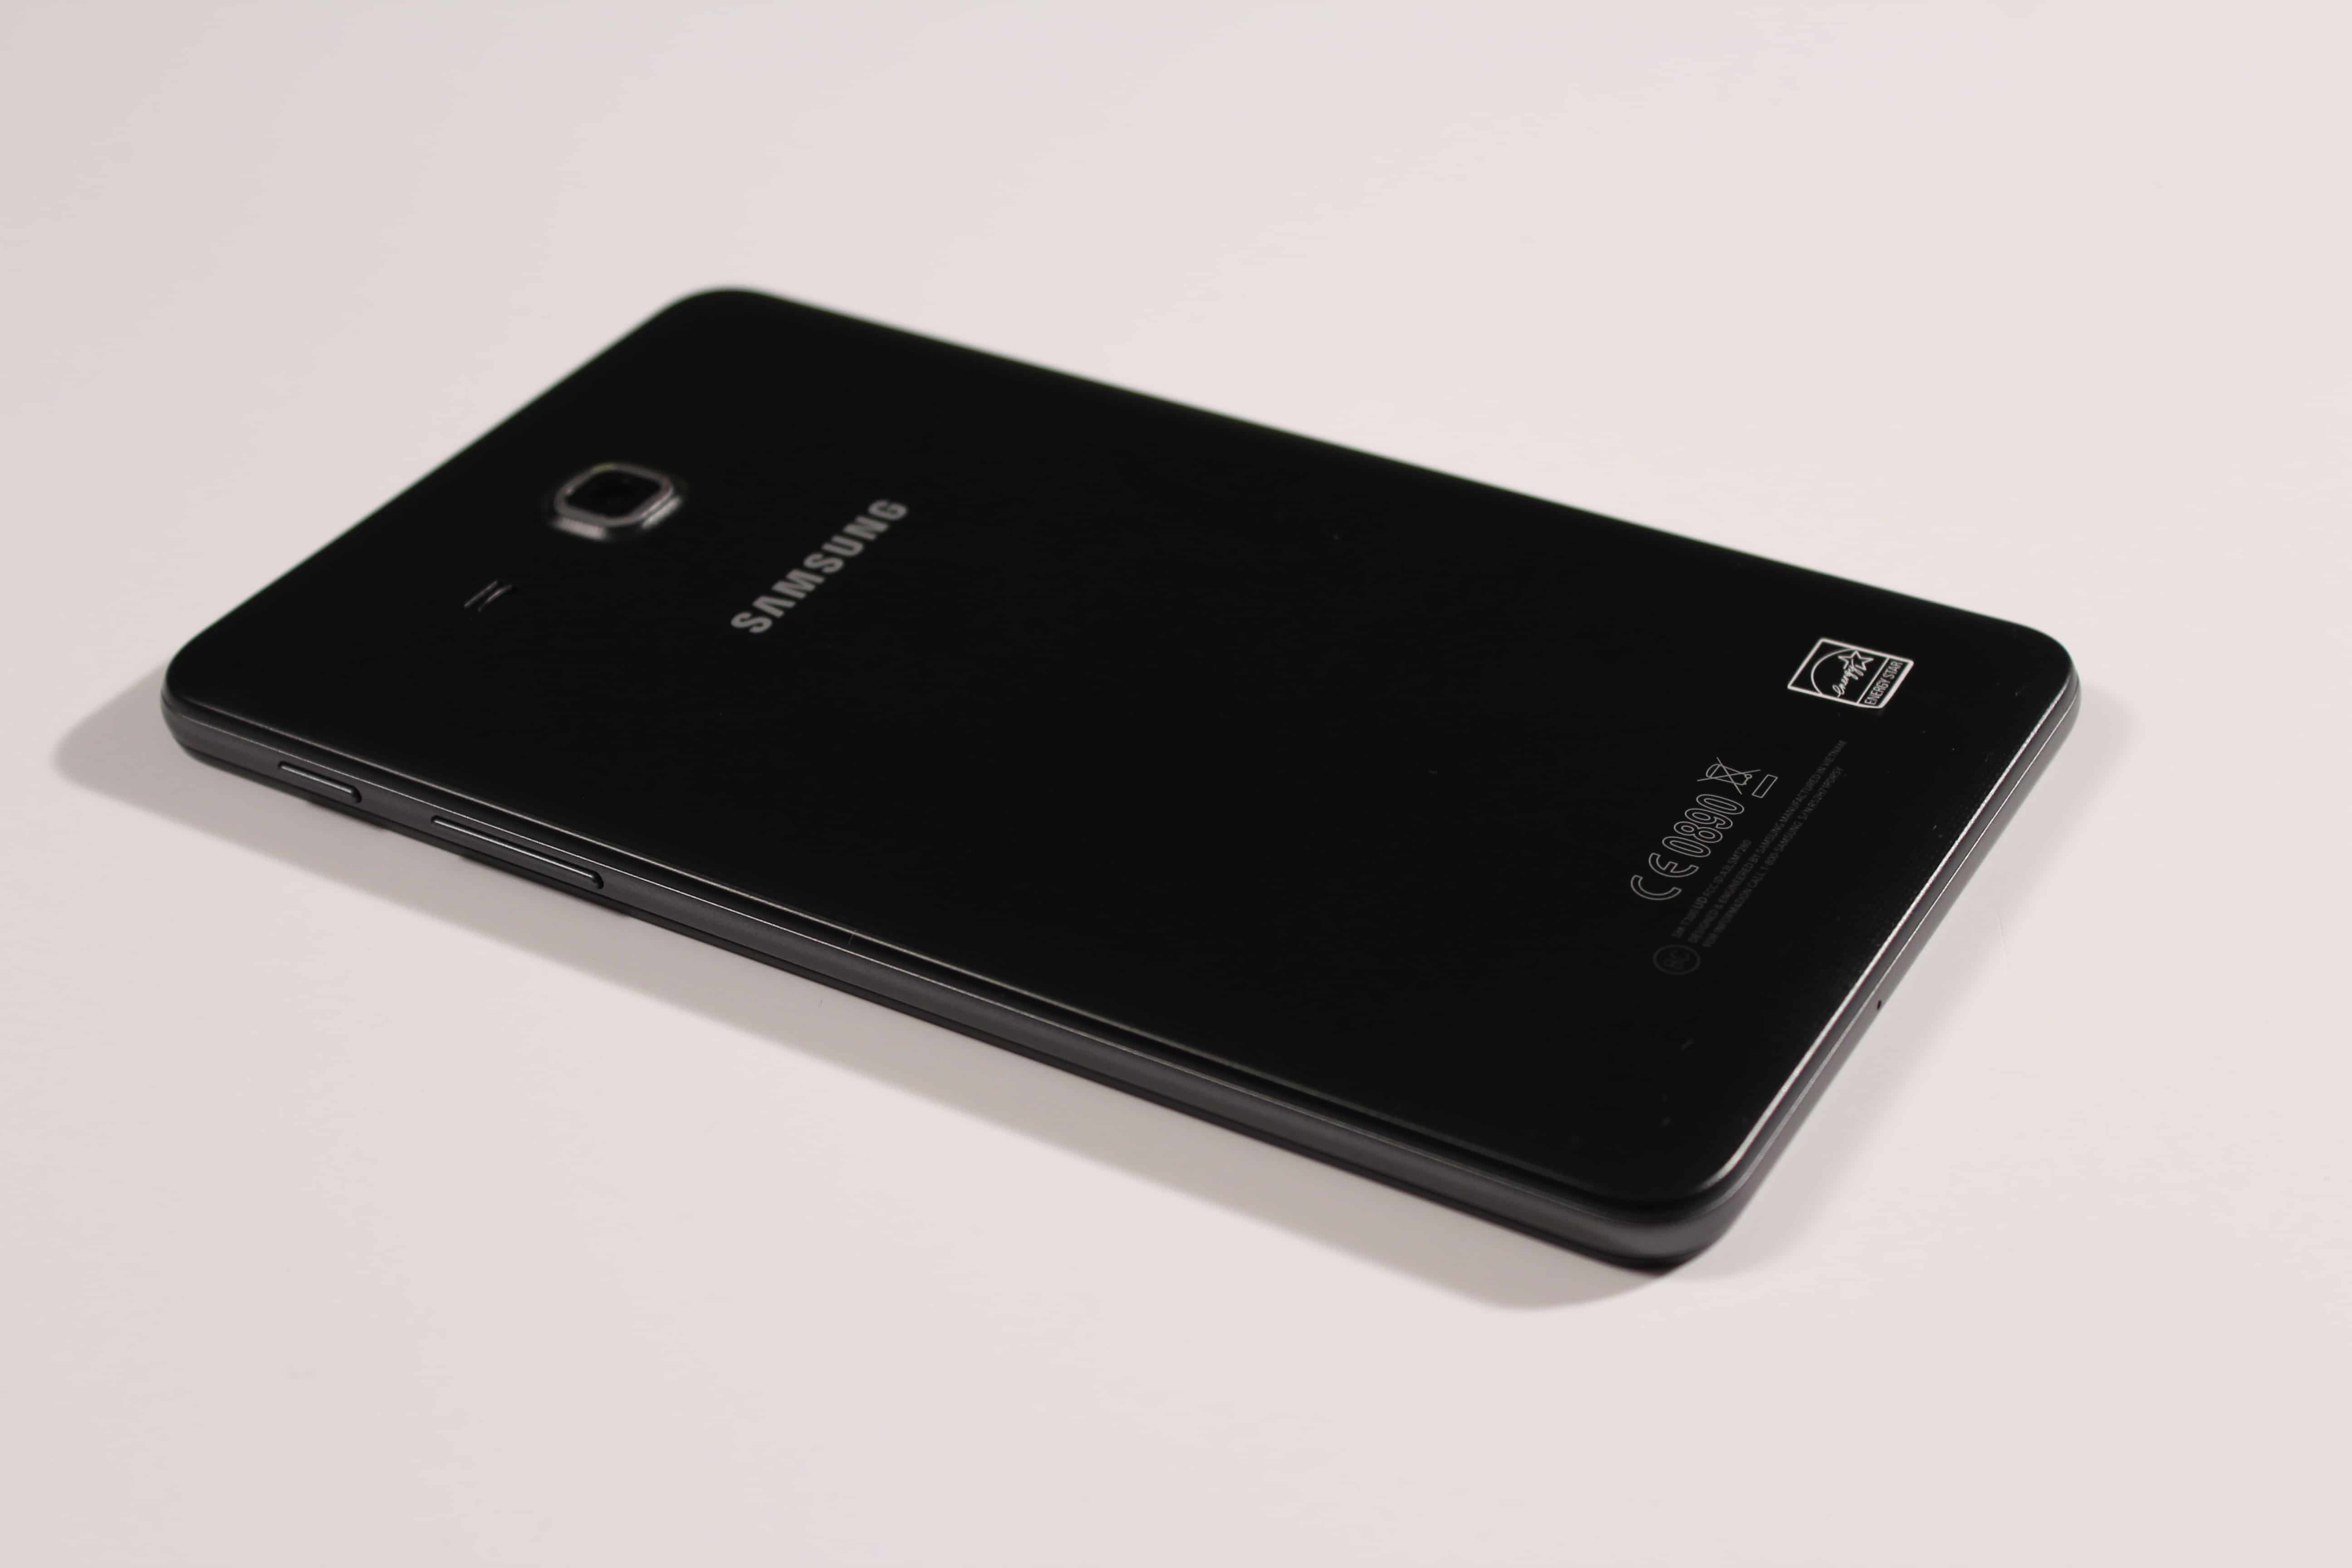 B&N Samsung Galaxy Tab Nook Review Good e-Reader